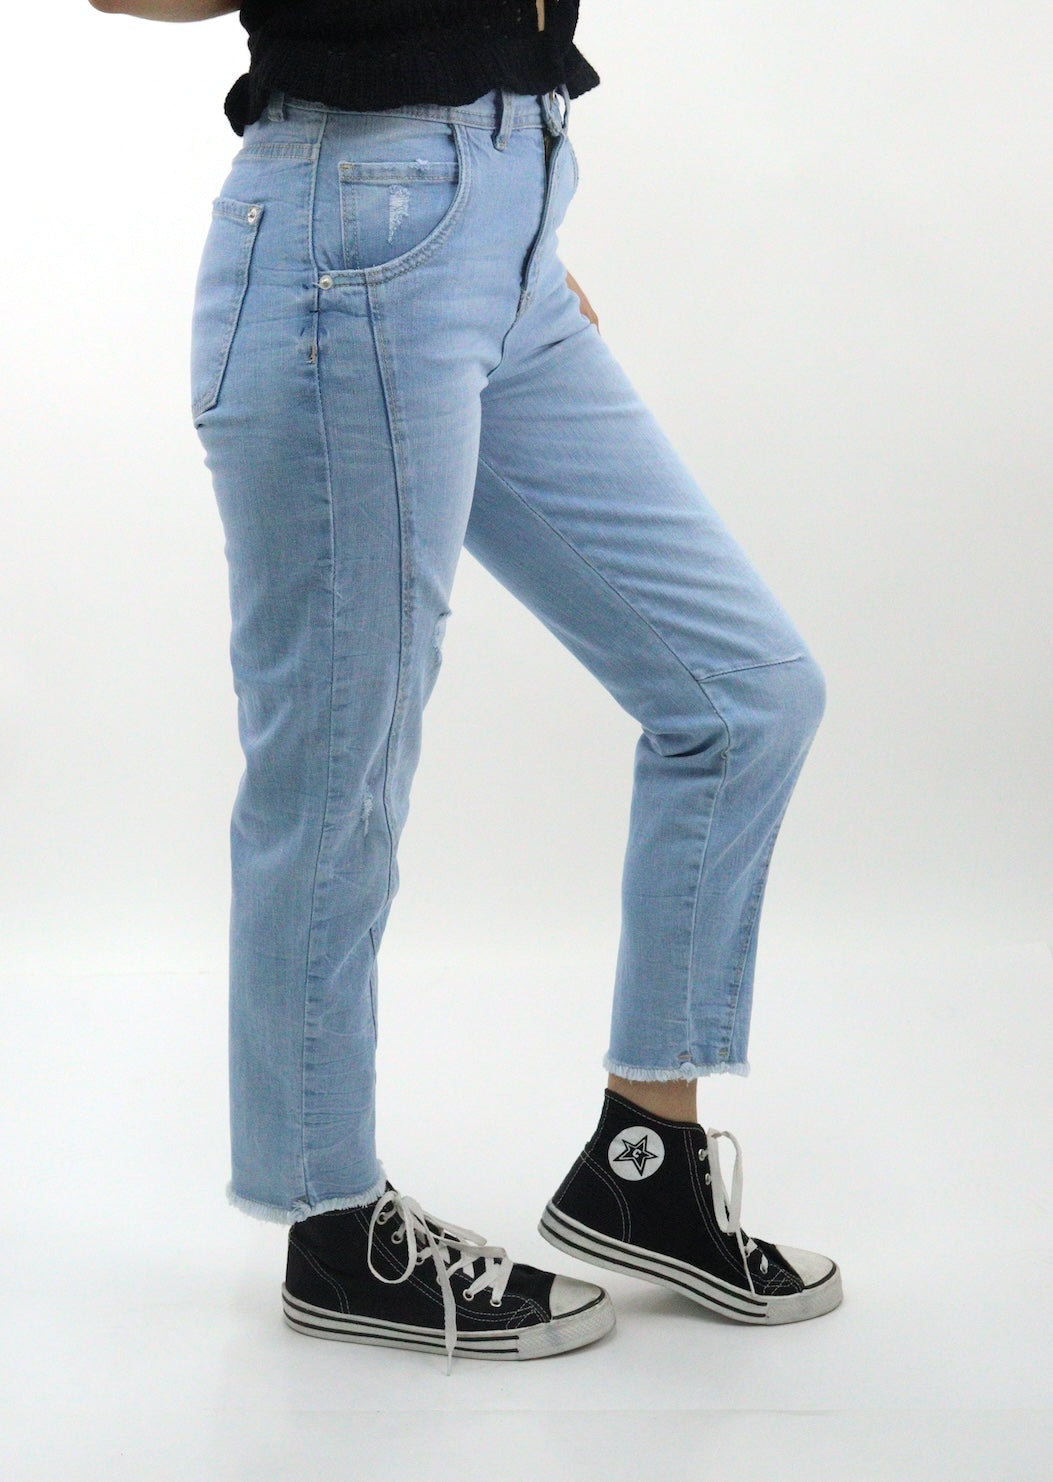 Jeans mom tobillero (NUEVA TEMPORADA)